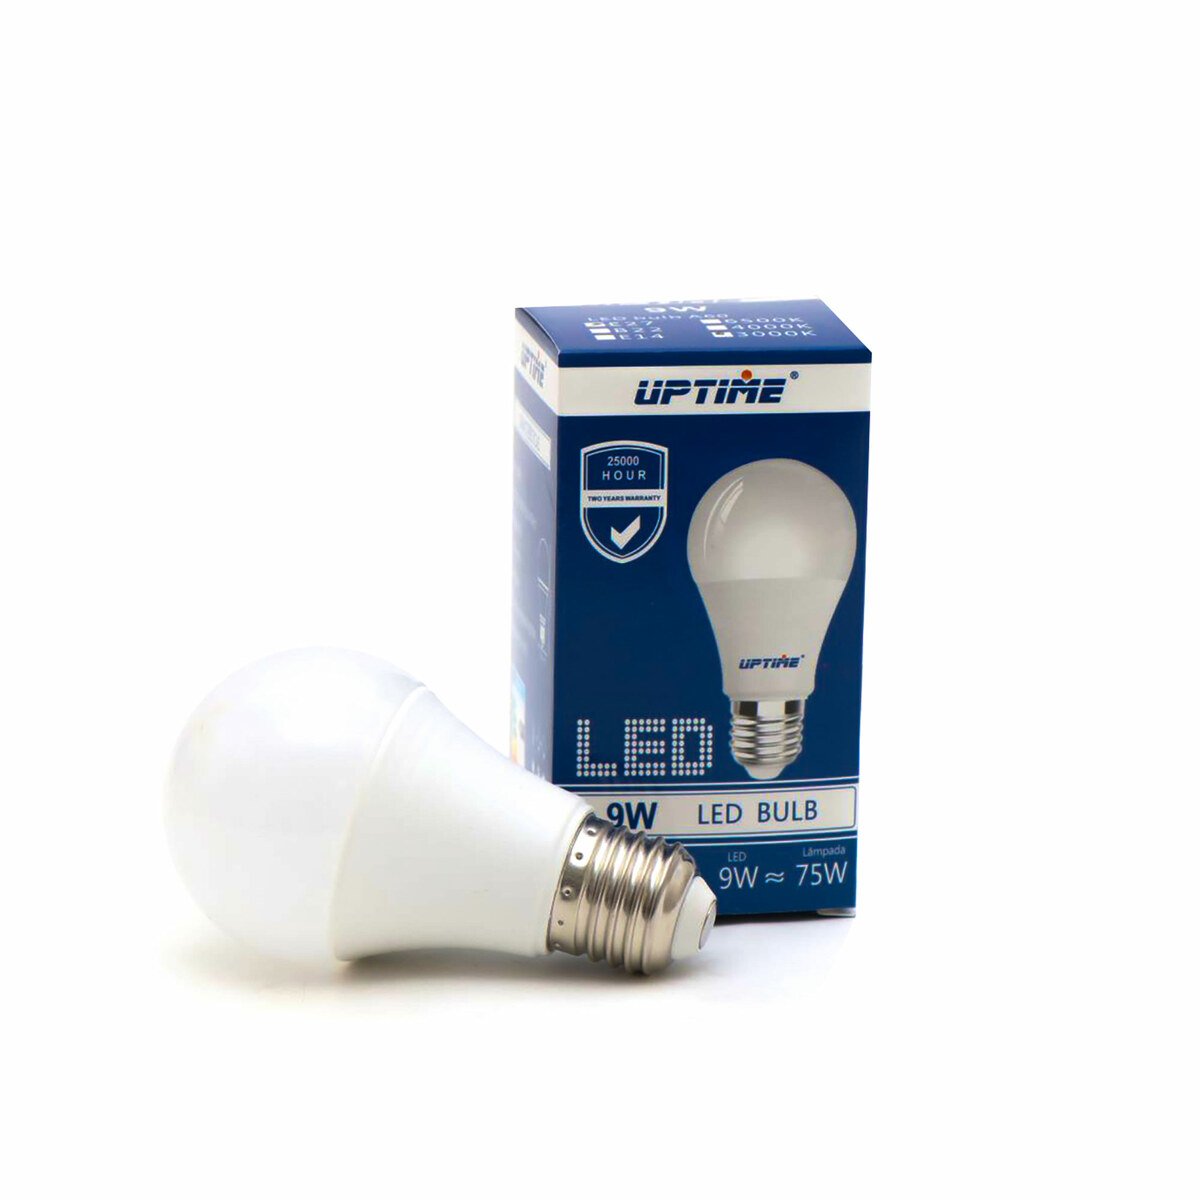 Uptime LED Bulb 9W E27 W/W Warm White